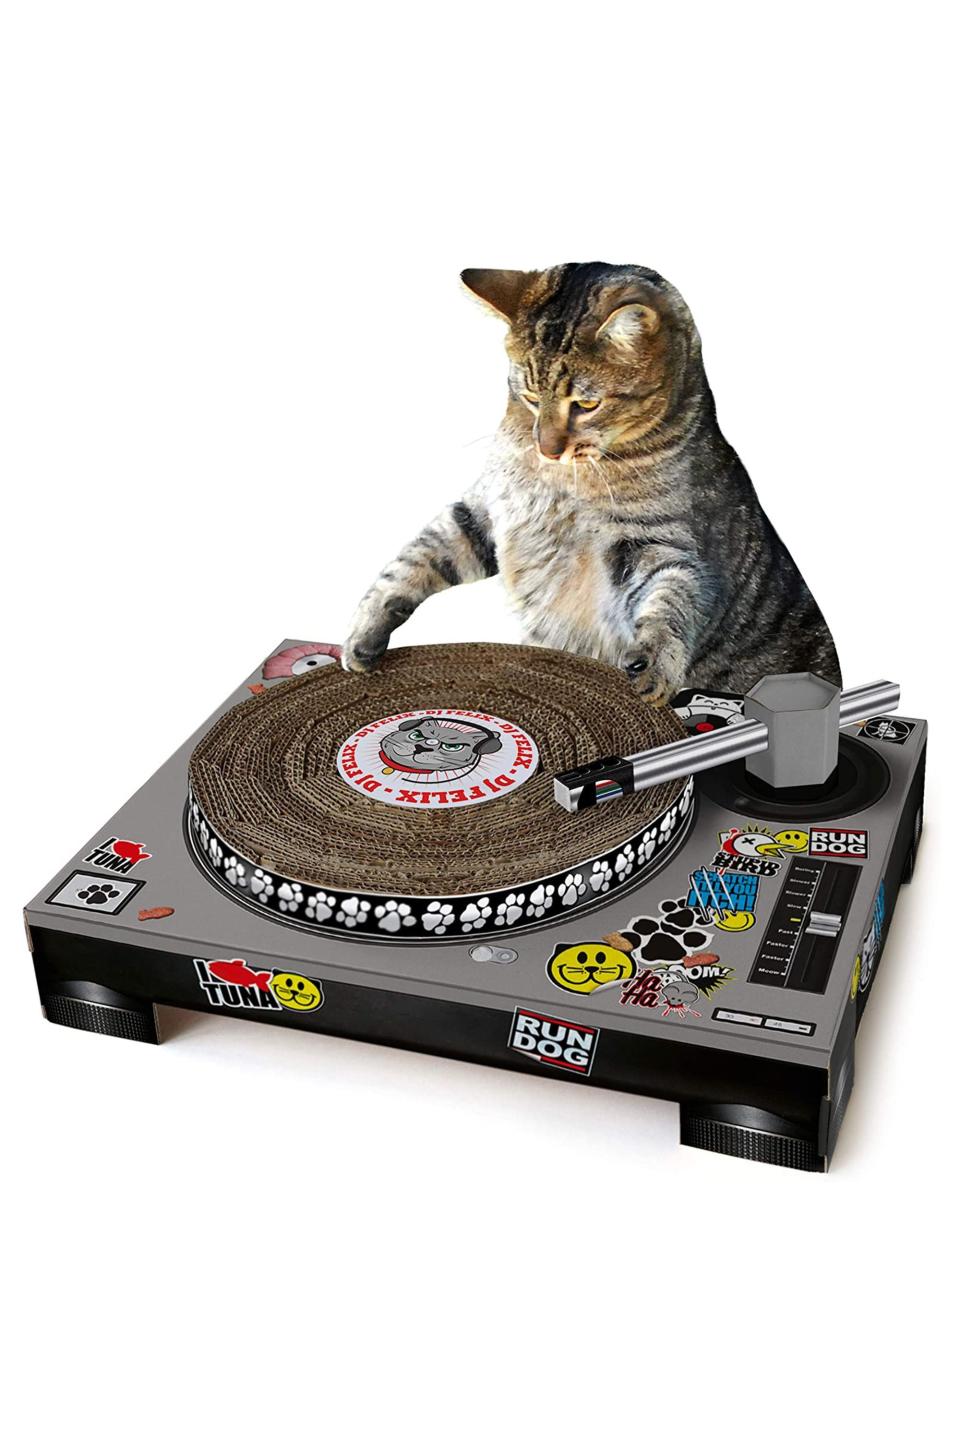 60) Suck UK Pet Cardboard Turntable & DJ Mixer